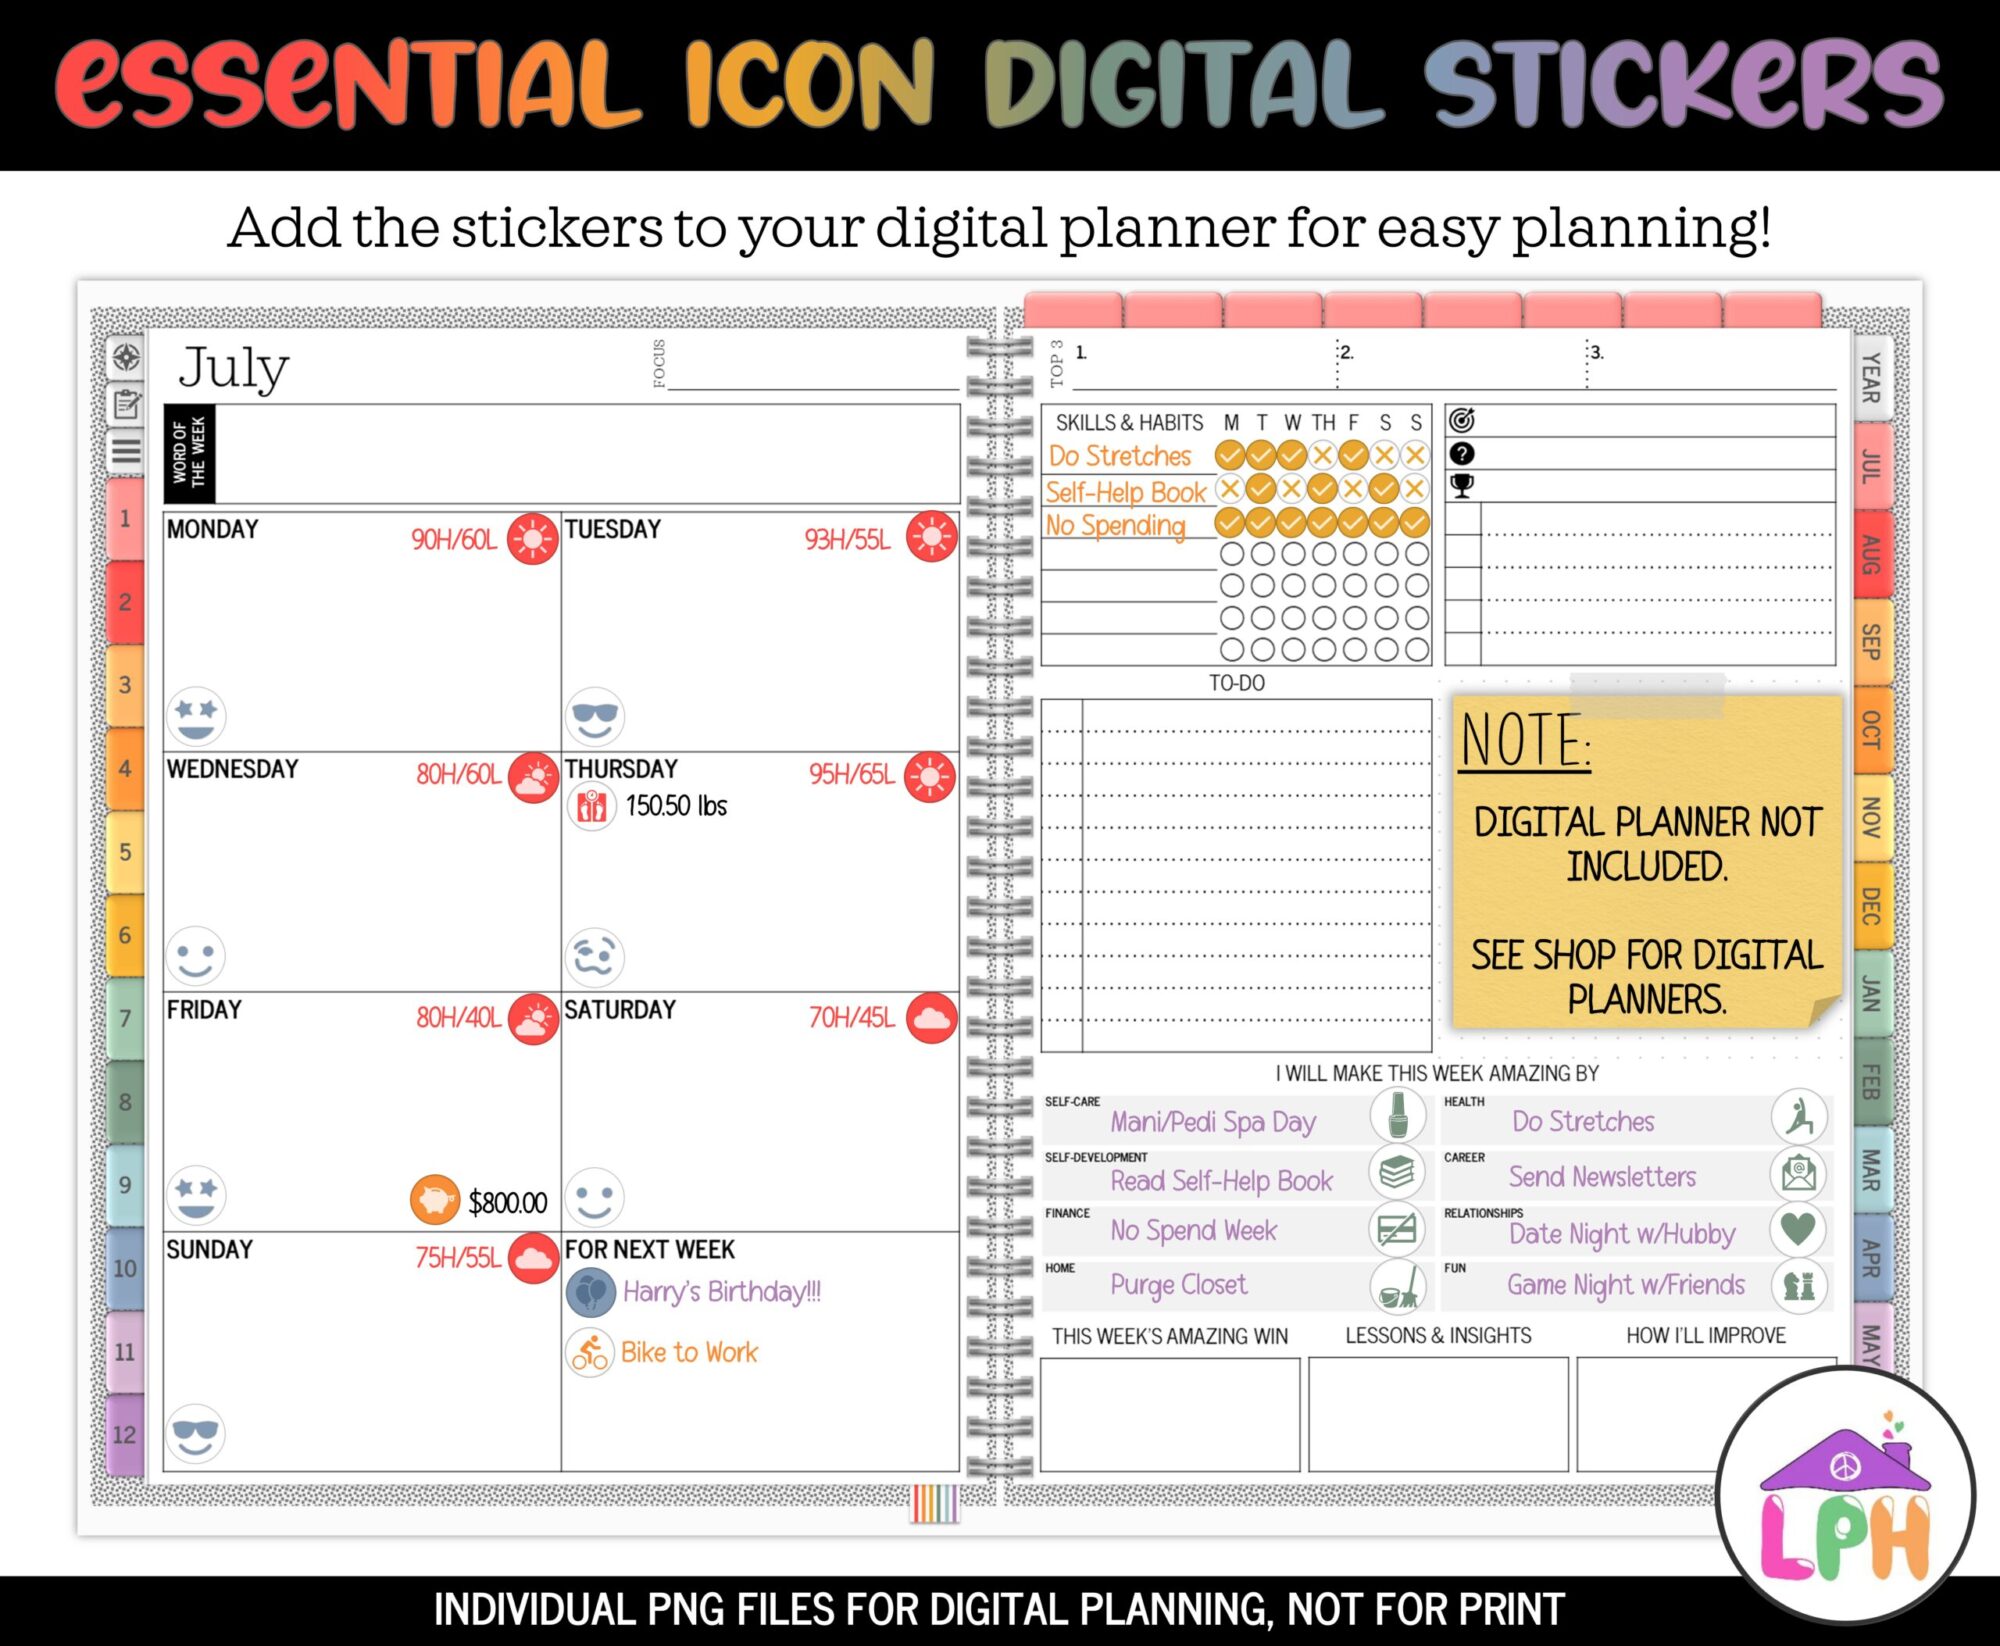 Vivid Functional Icon Digital Sticker